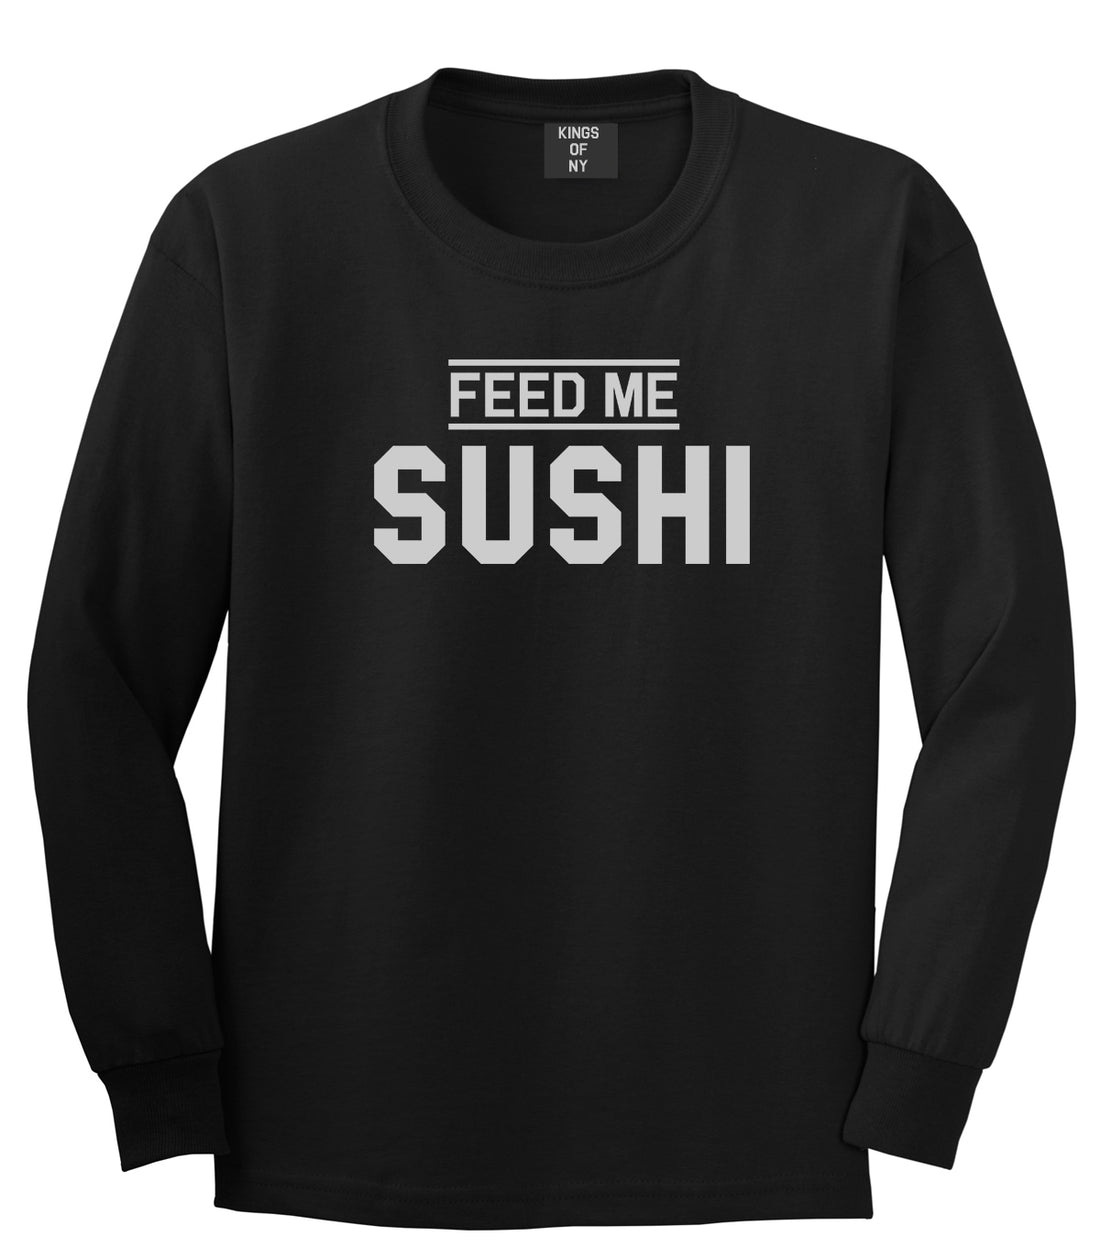 Feed Me Sushi Mens Black Long Sleeve T-Shirt by KINGS OF NY